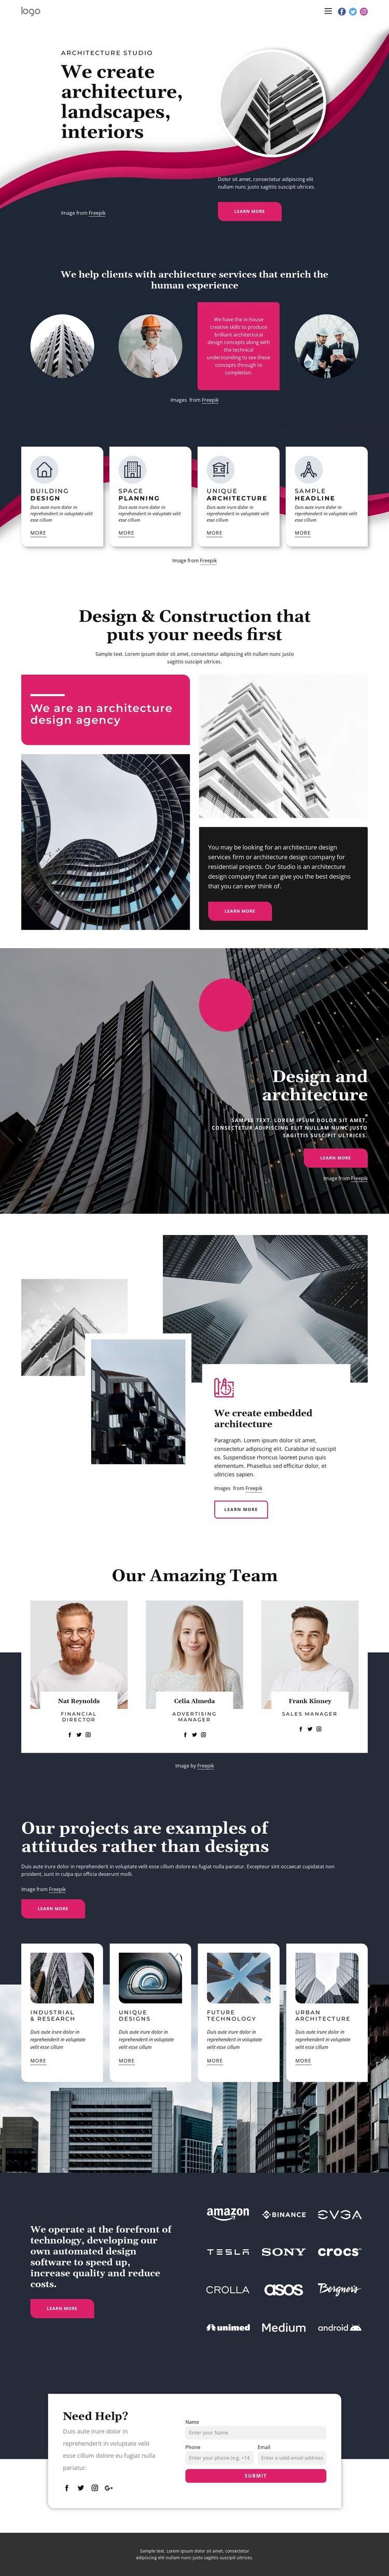 We create great architecture Website Design